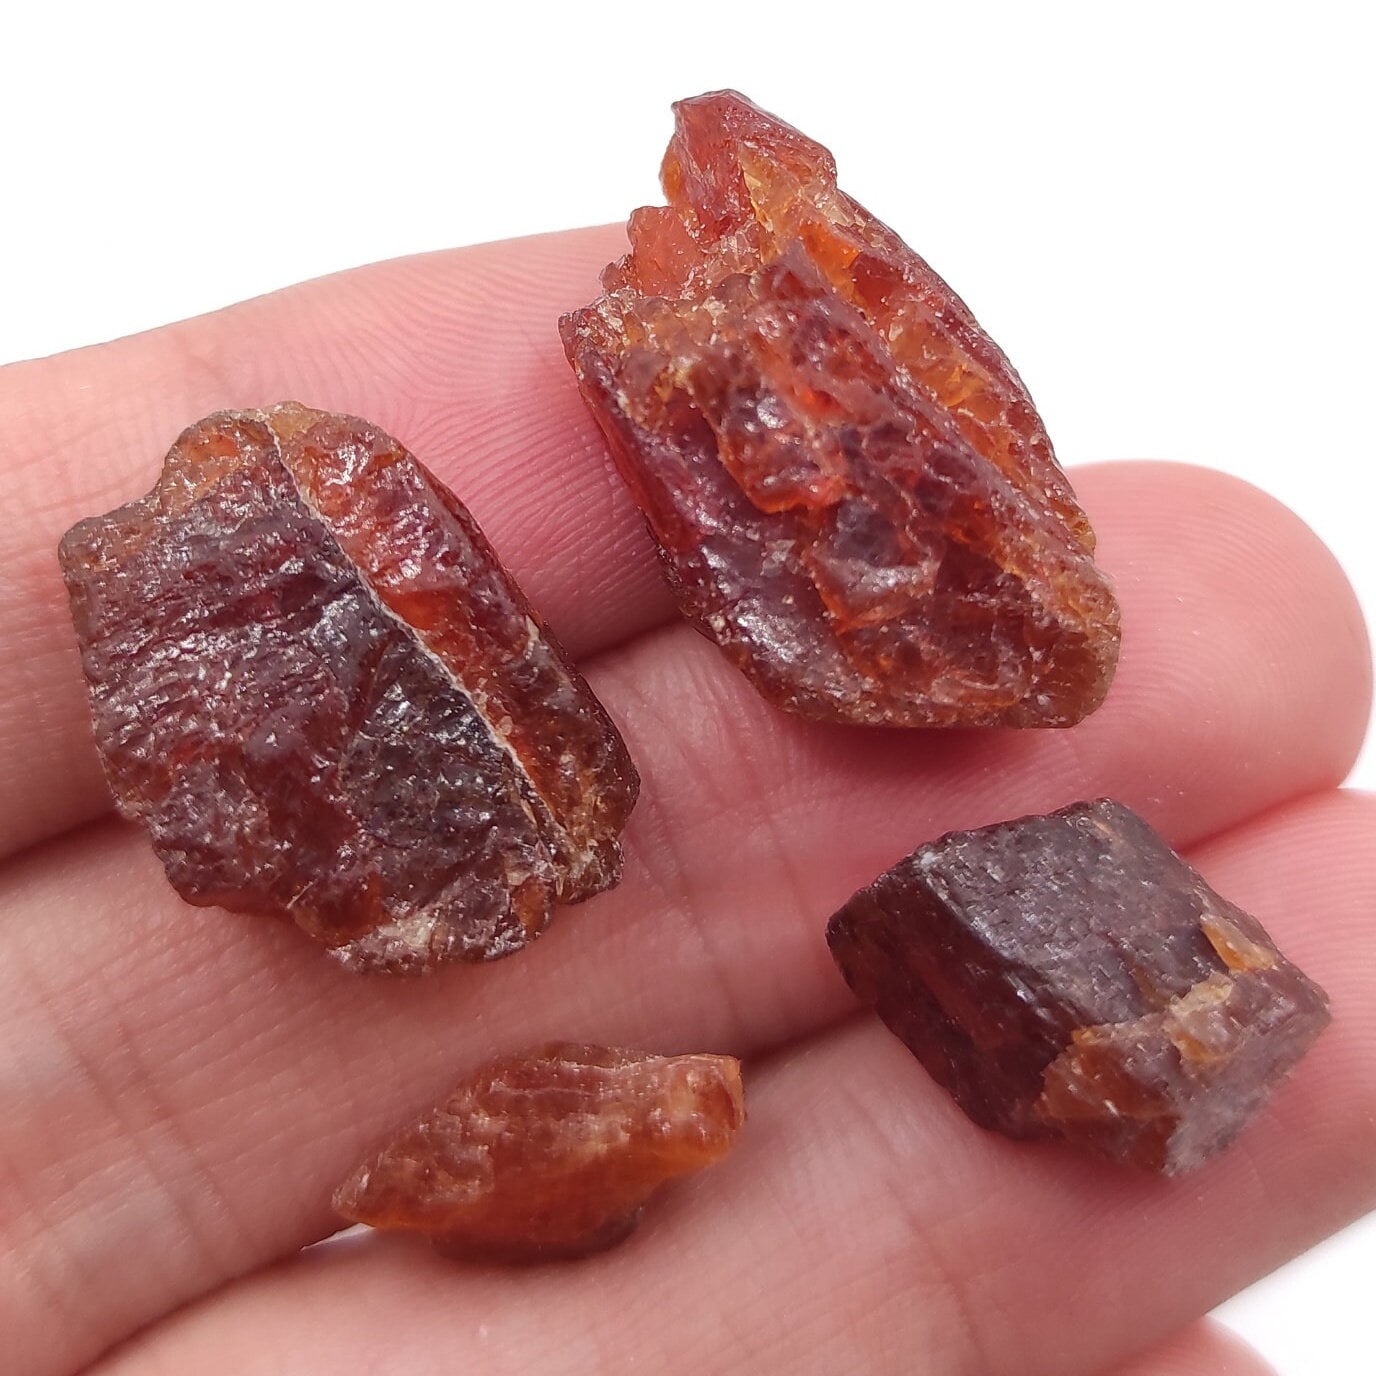 71ct 4pcs Hessonite Garnet Lot - Natural Hessonite Garnet - Loose Gemstones - Rough Gems - Raw Garnet Crystals from Pakistan